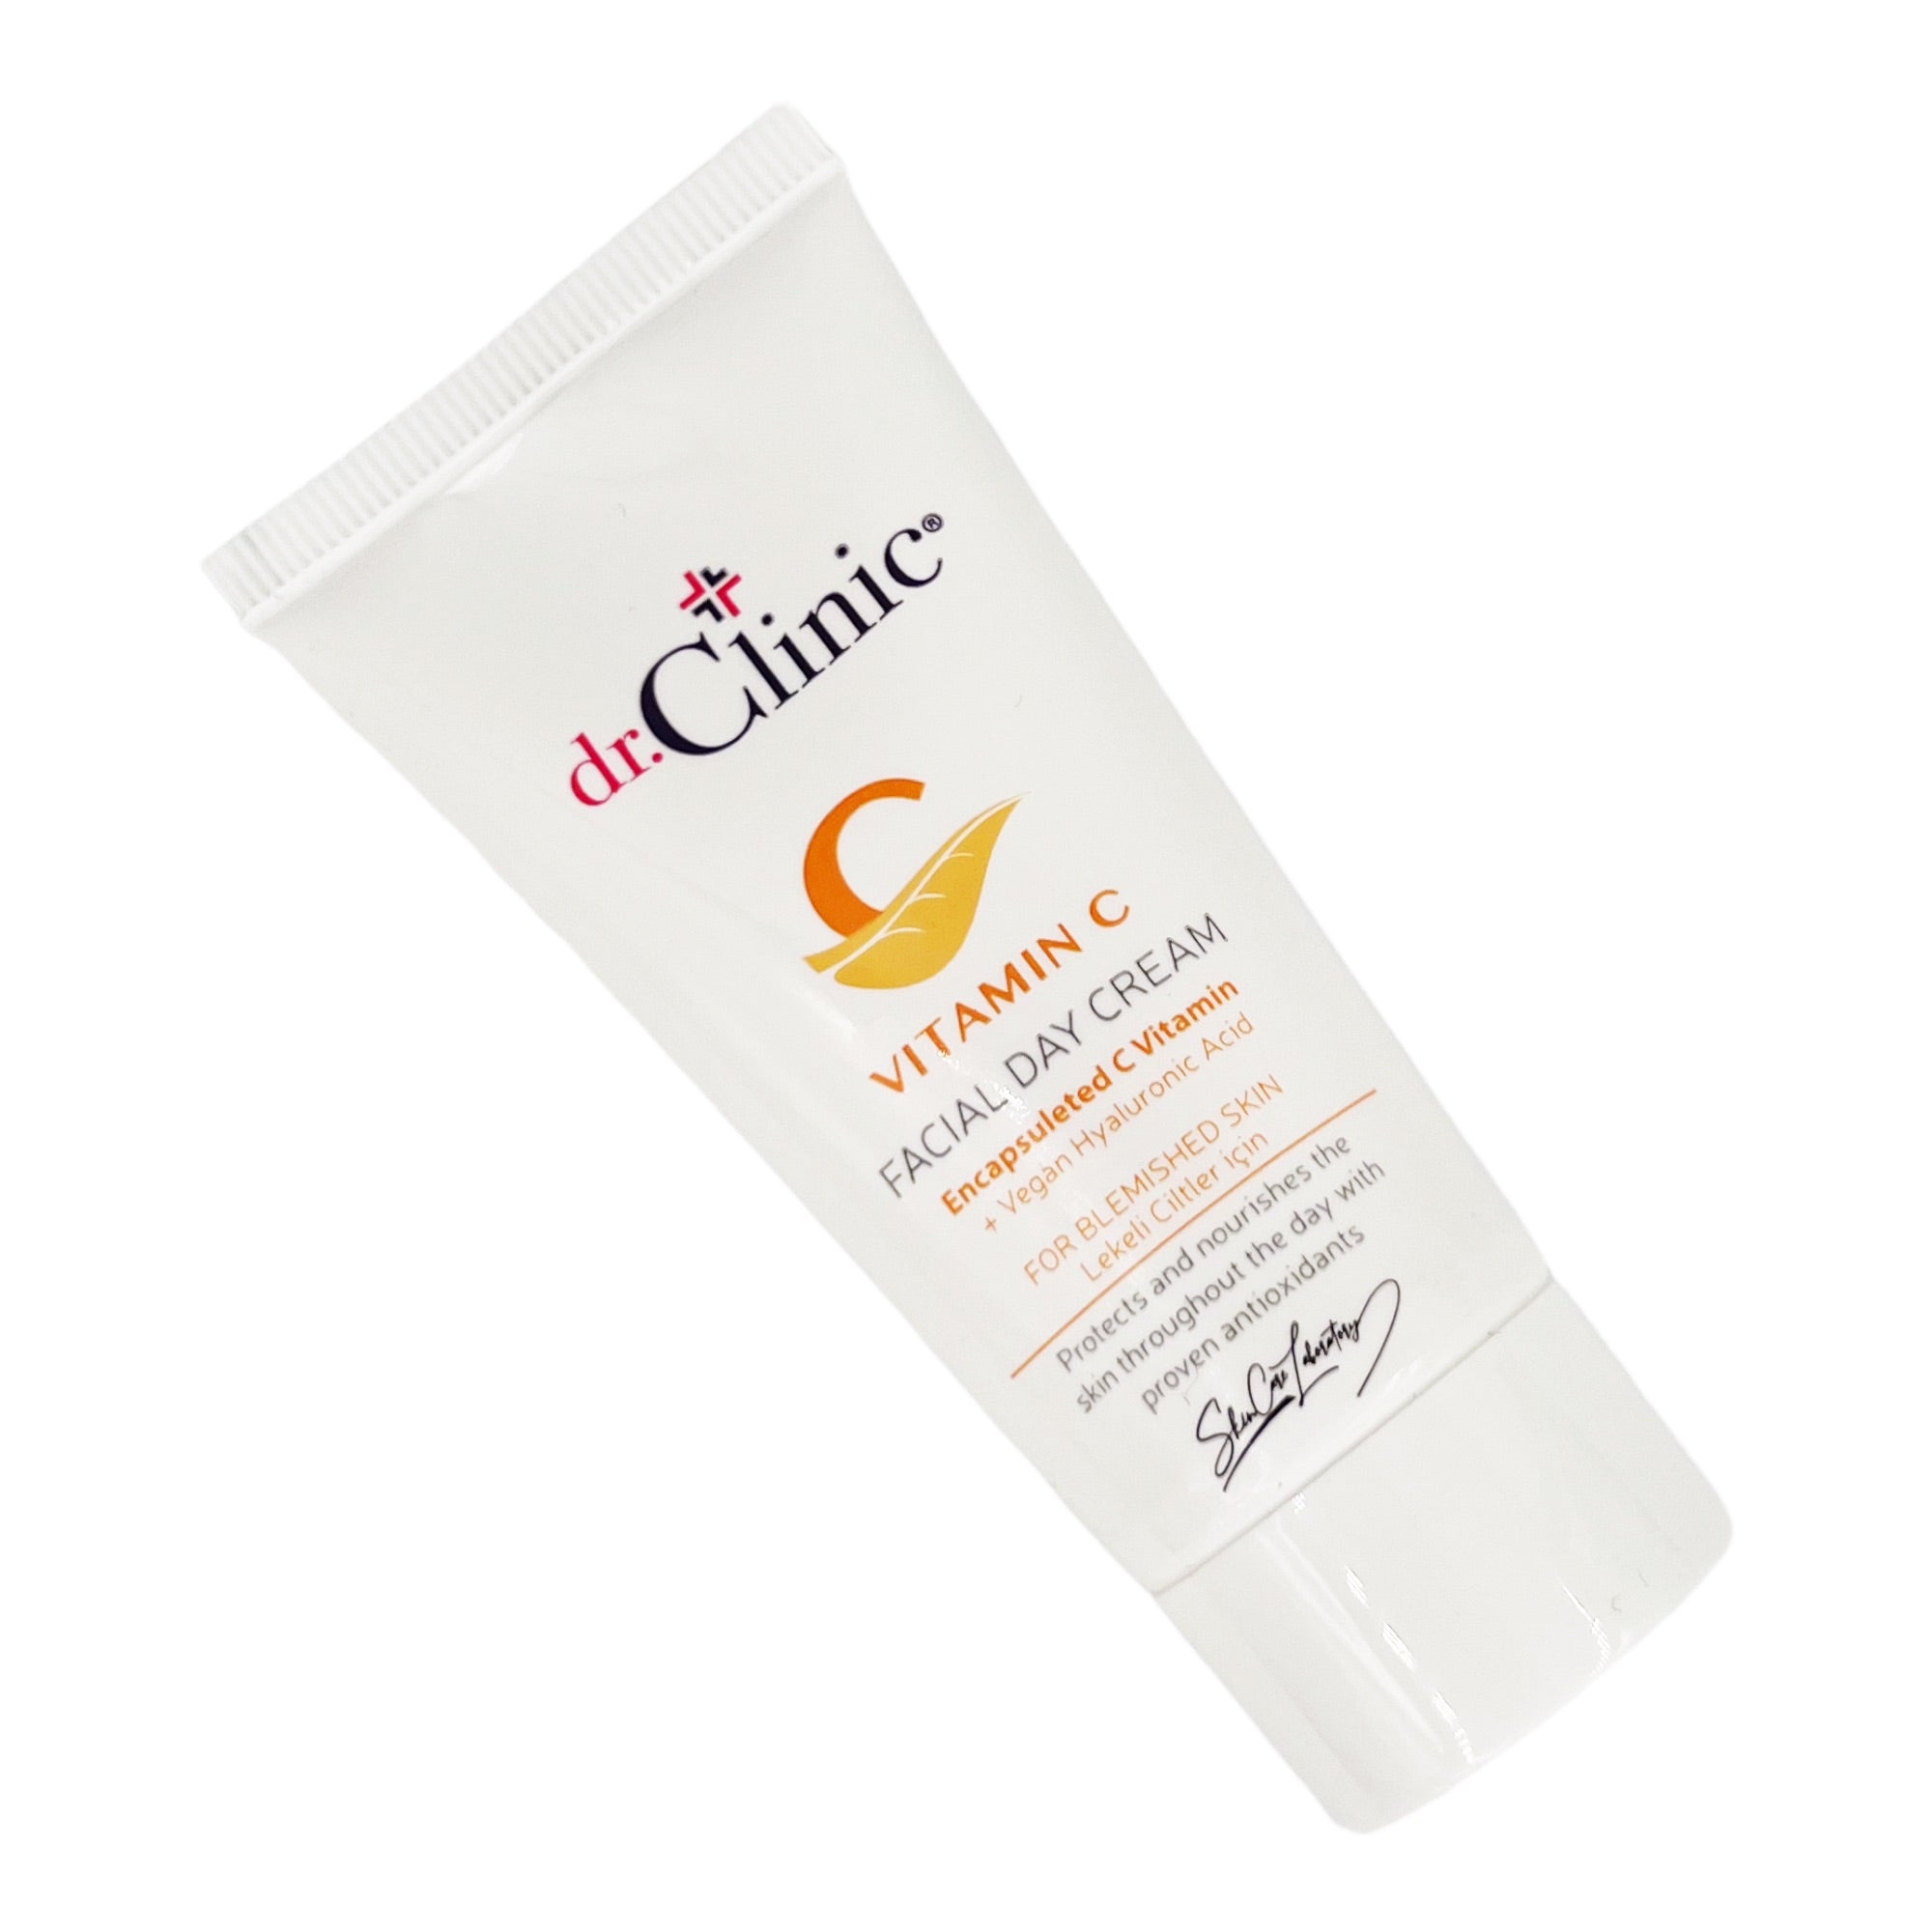 Dr.Clinic - Vitamin C Facial Day Cream 50ml